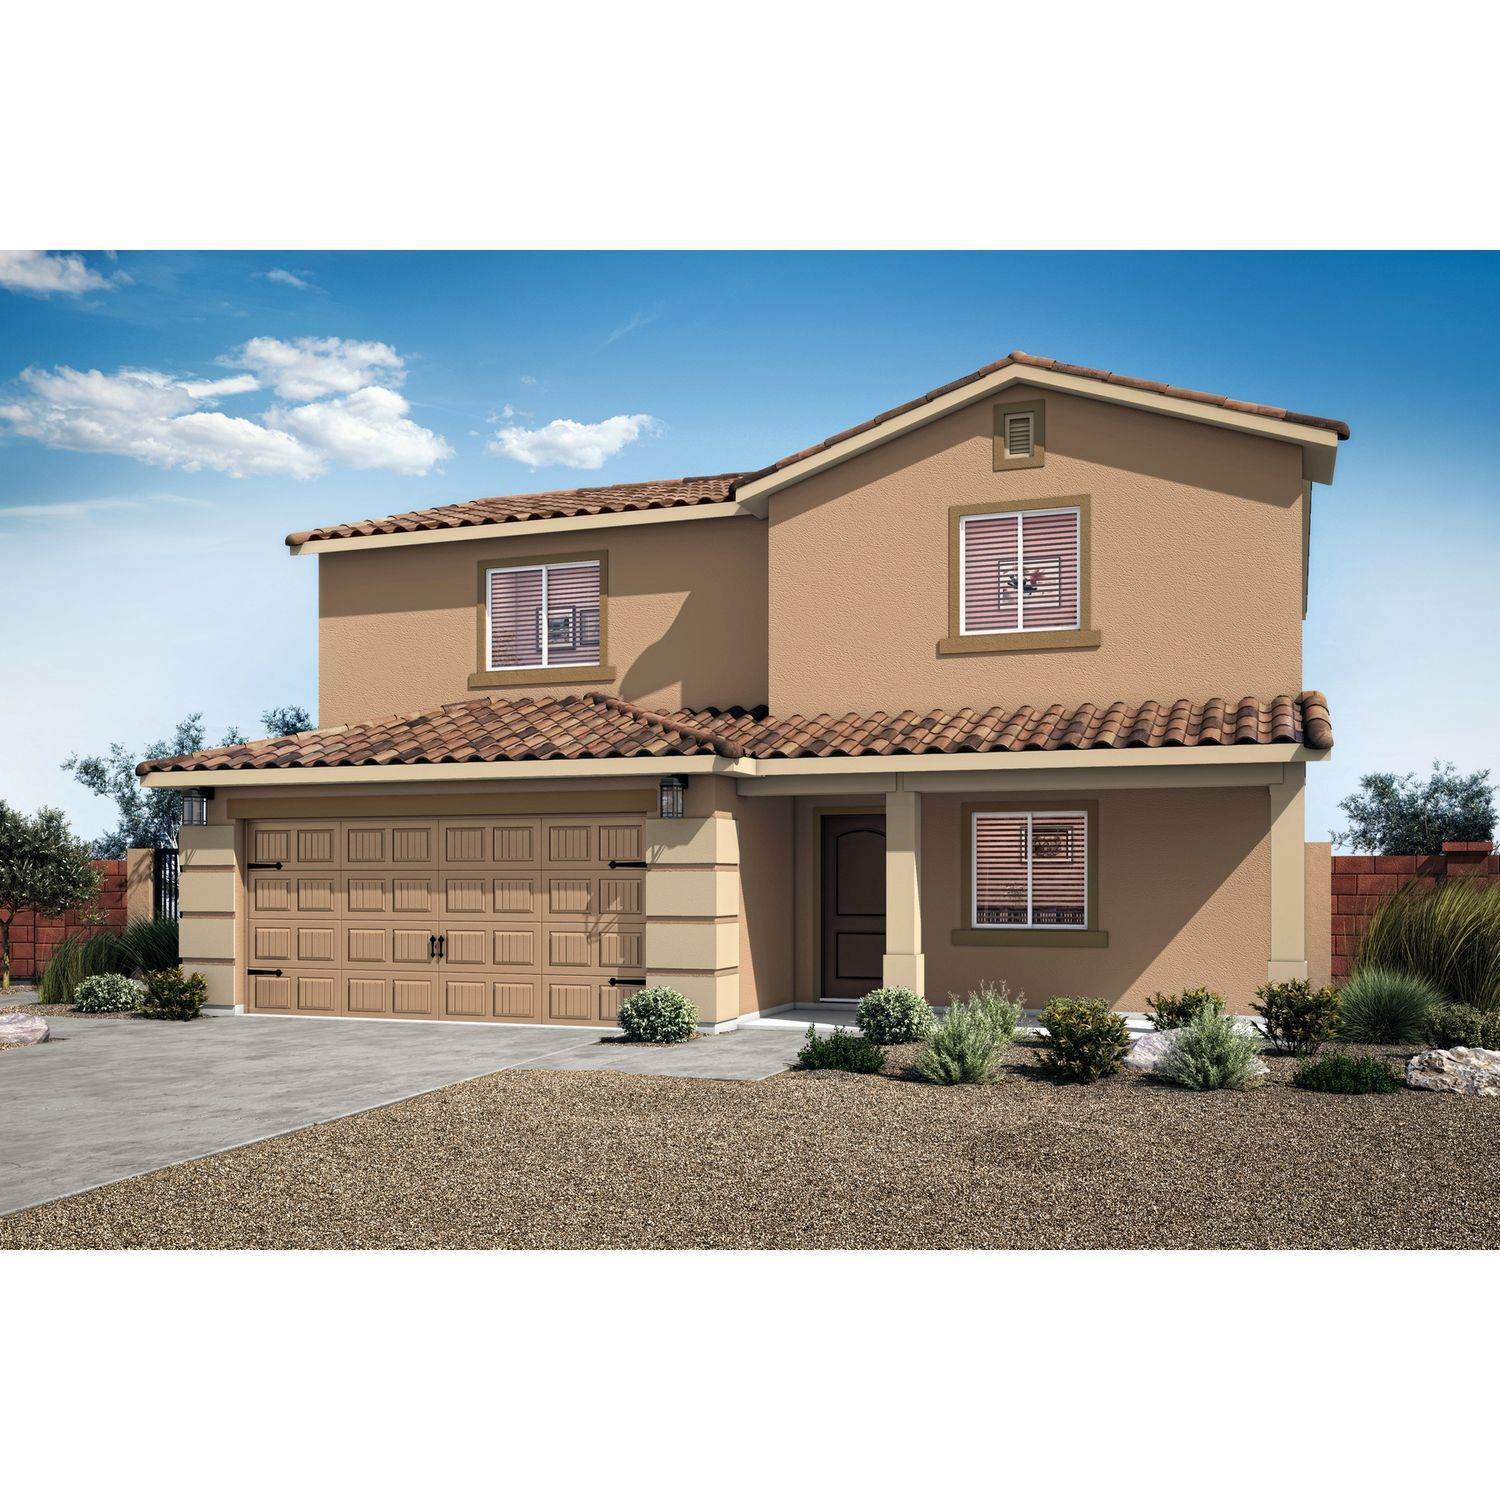 6. Sunrise Estates building at 263 S Ash St, Florence, AZ 85132